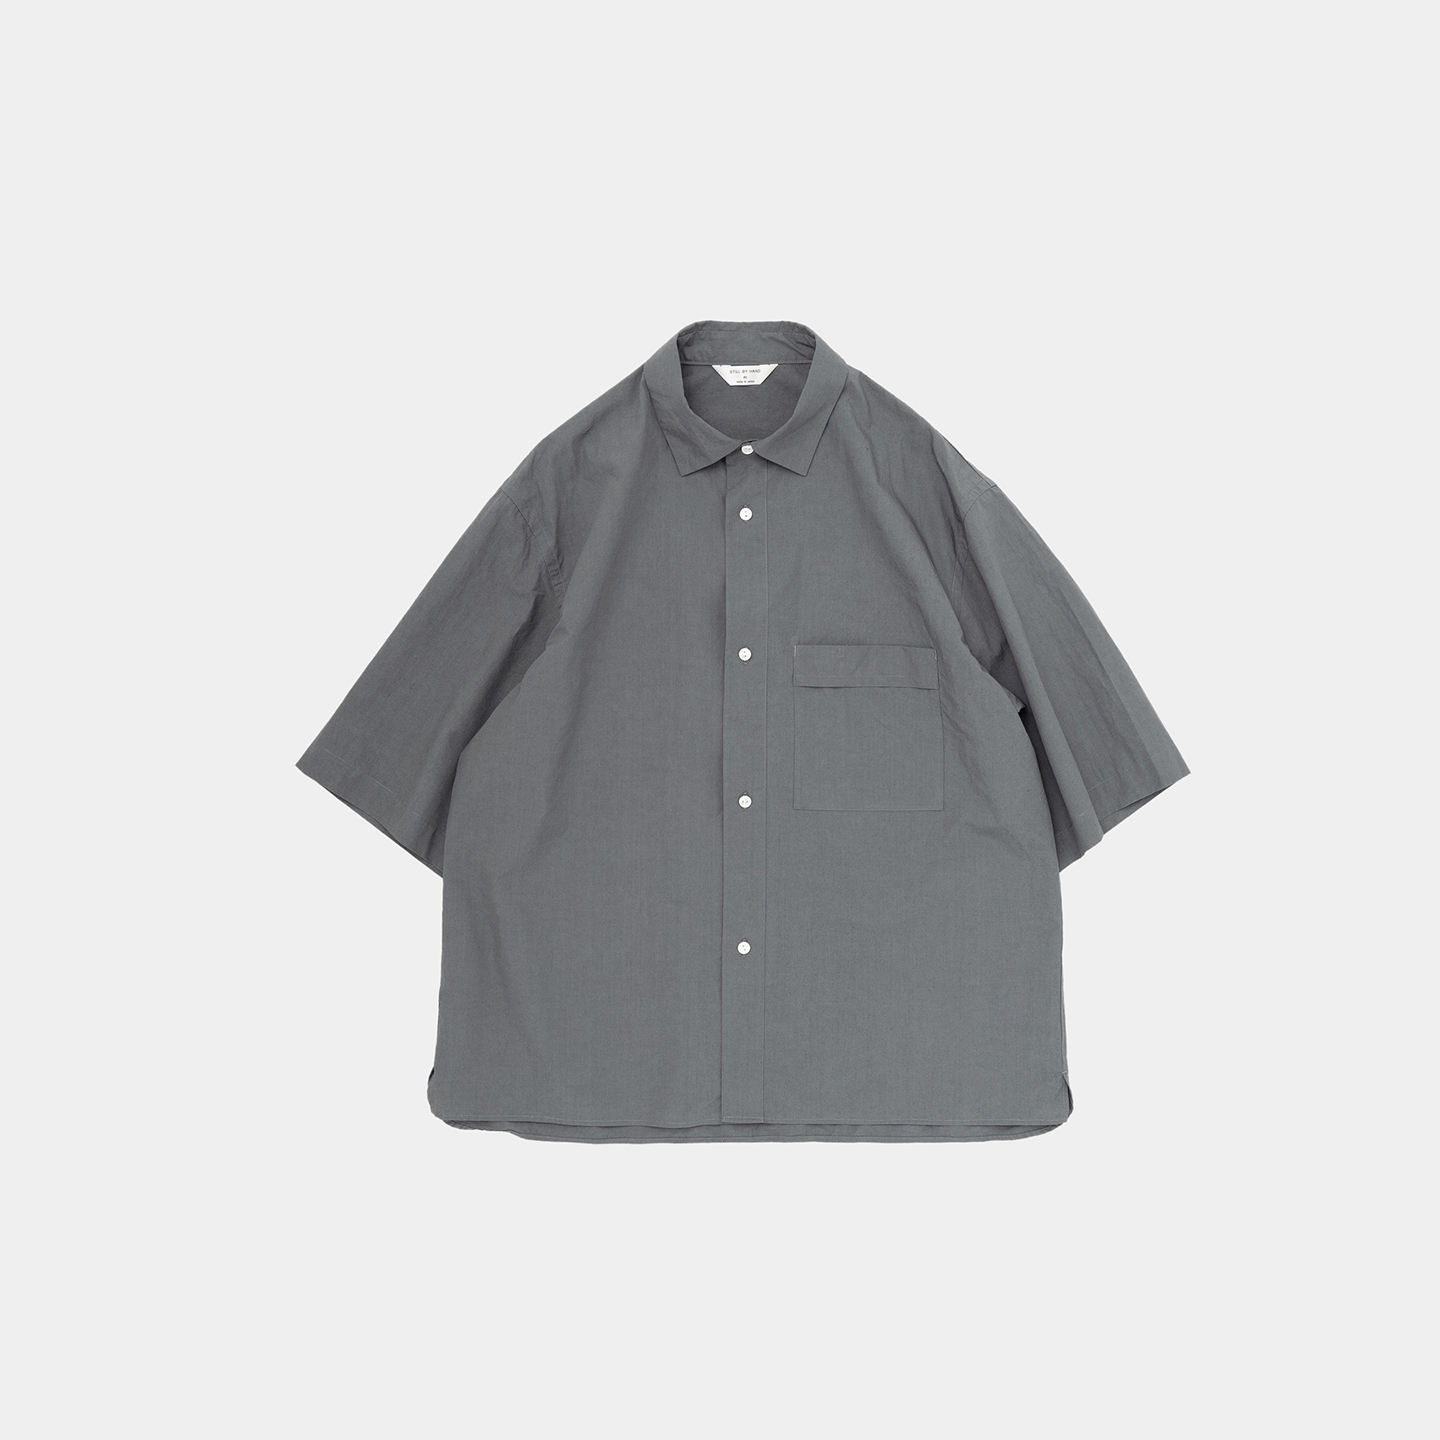 STILL BY HAND - C/Li Half Sleeve Shirt / SLATE GREY